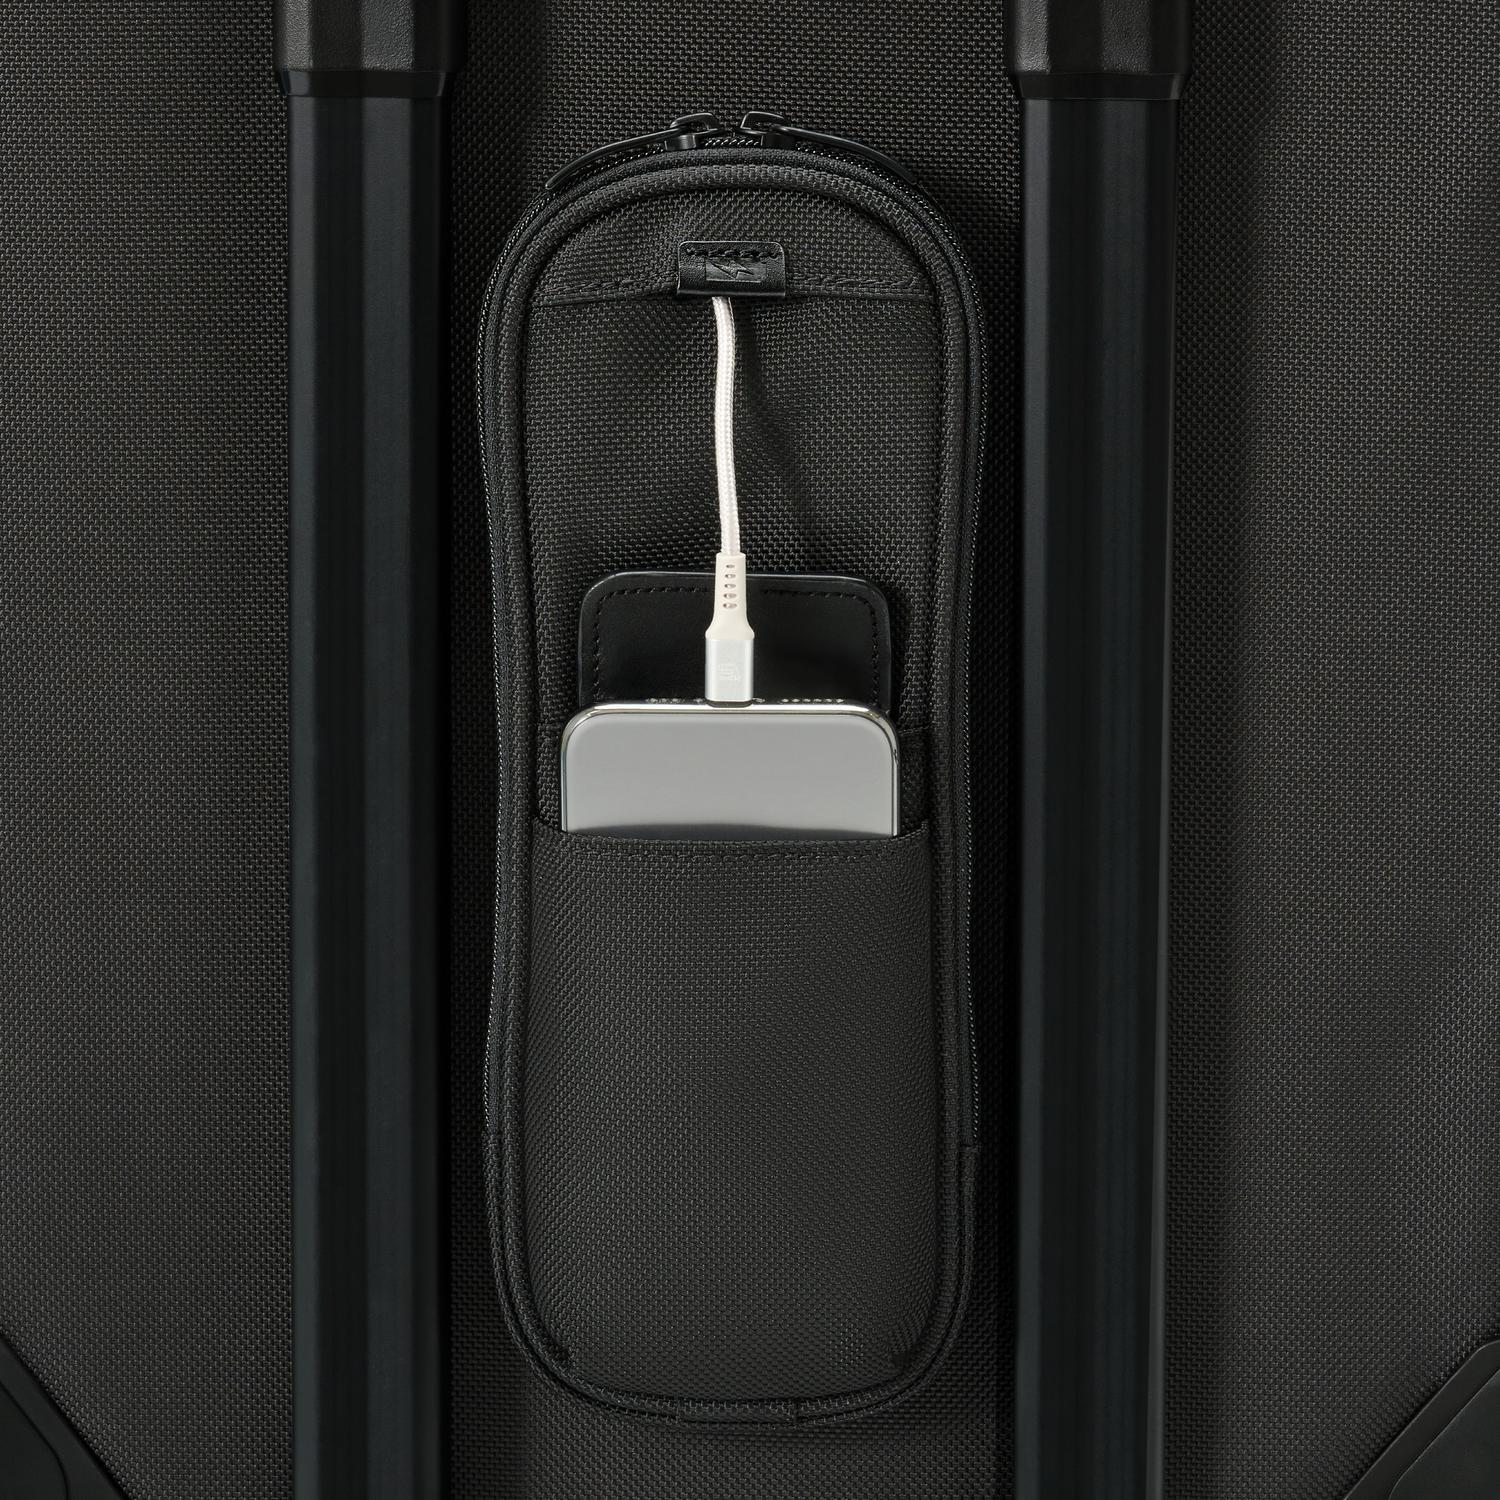 Carry-On Wheeled Garment Bag — Travel Style Luggage